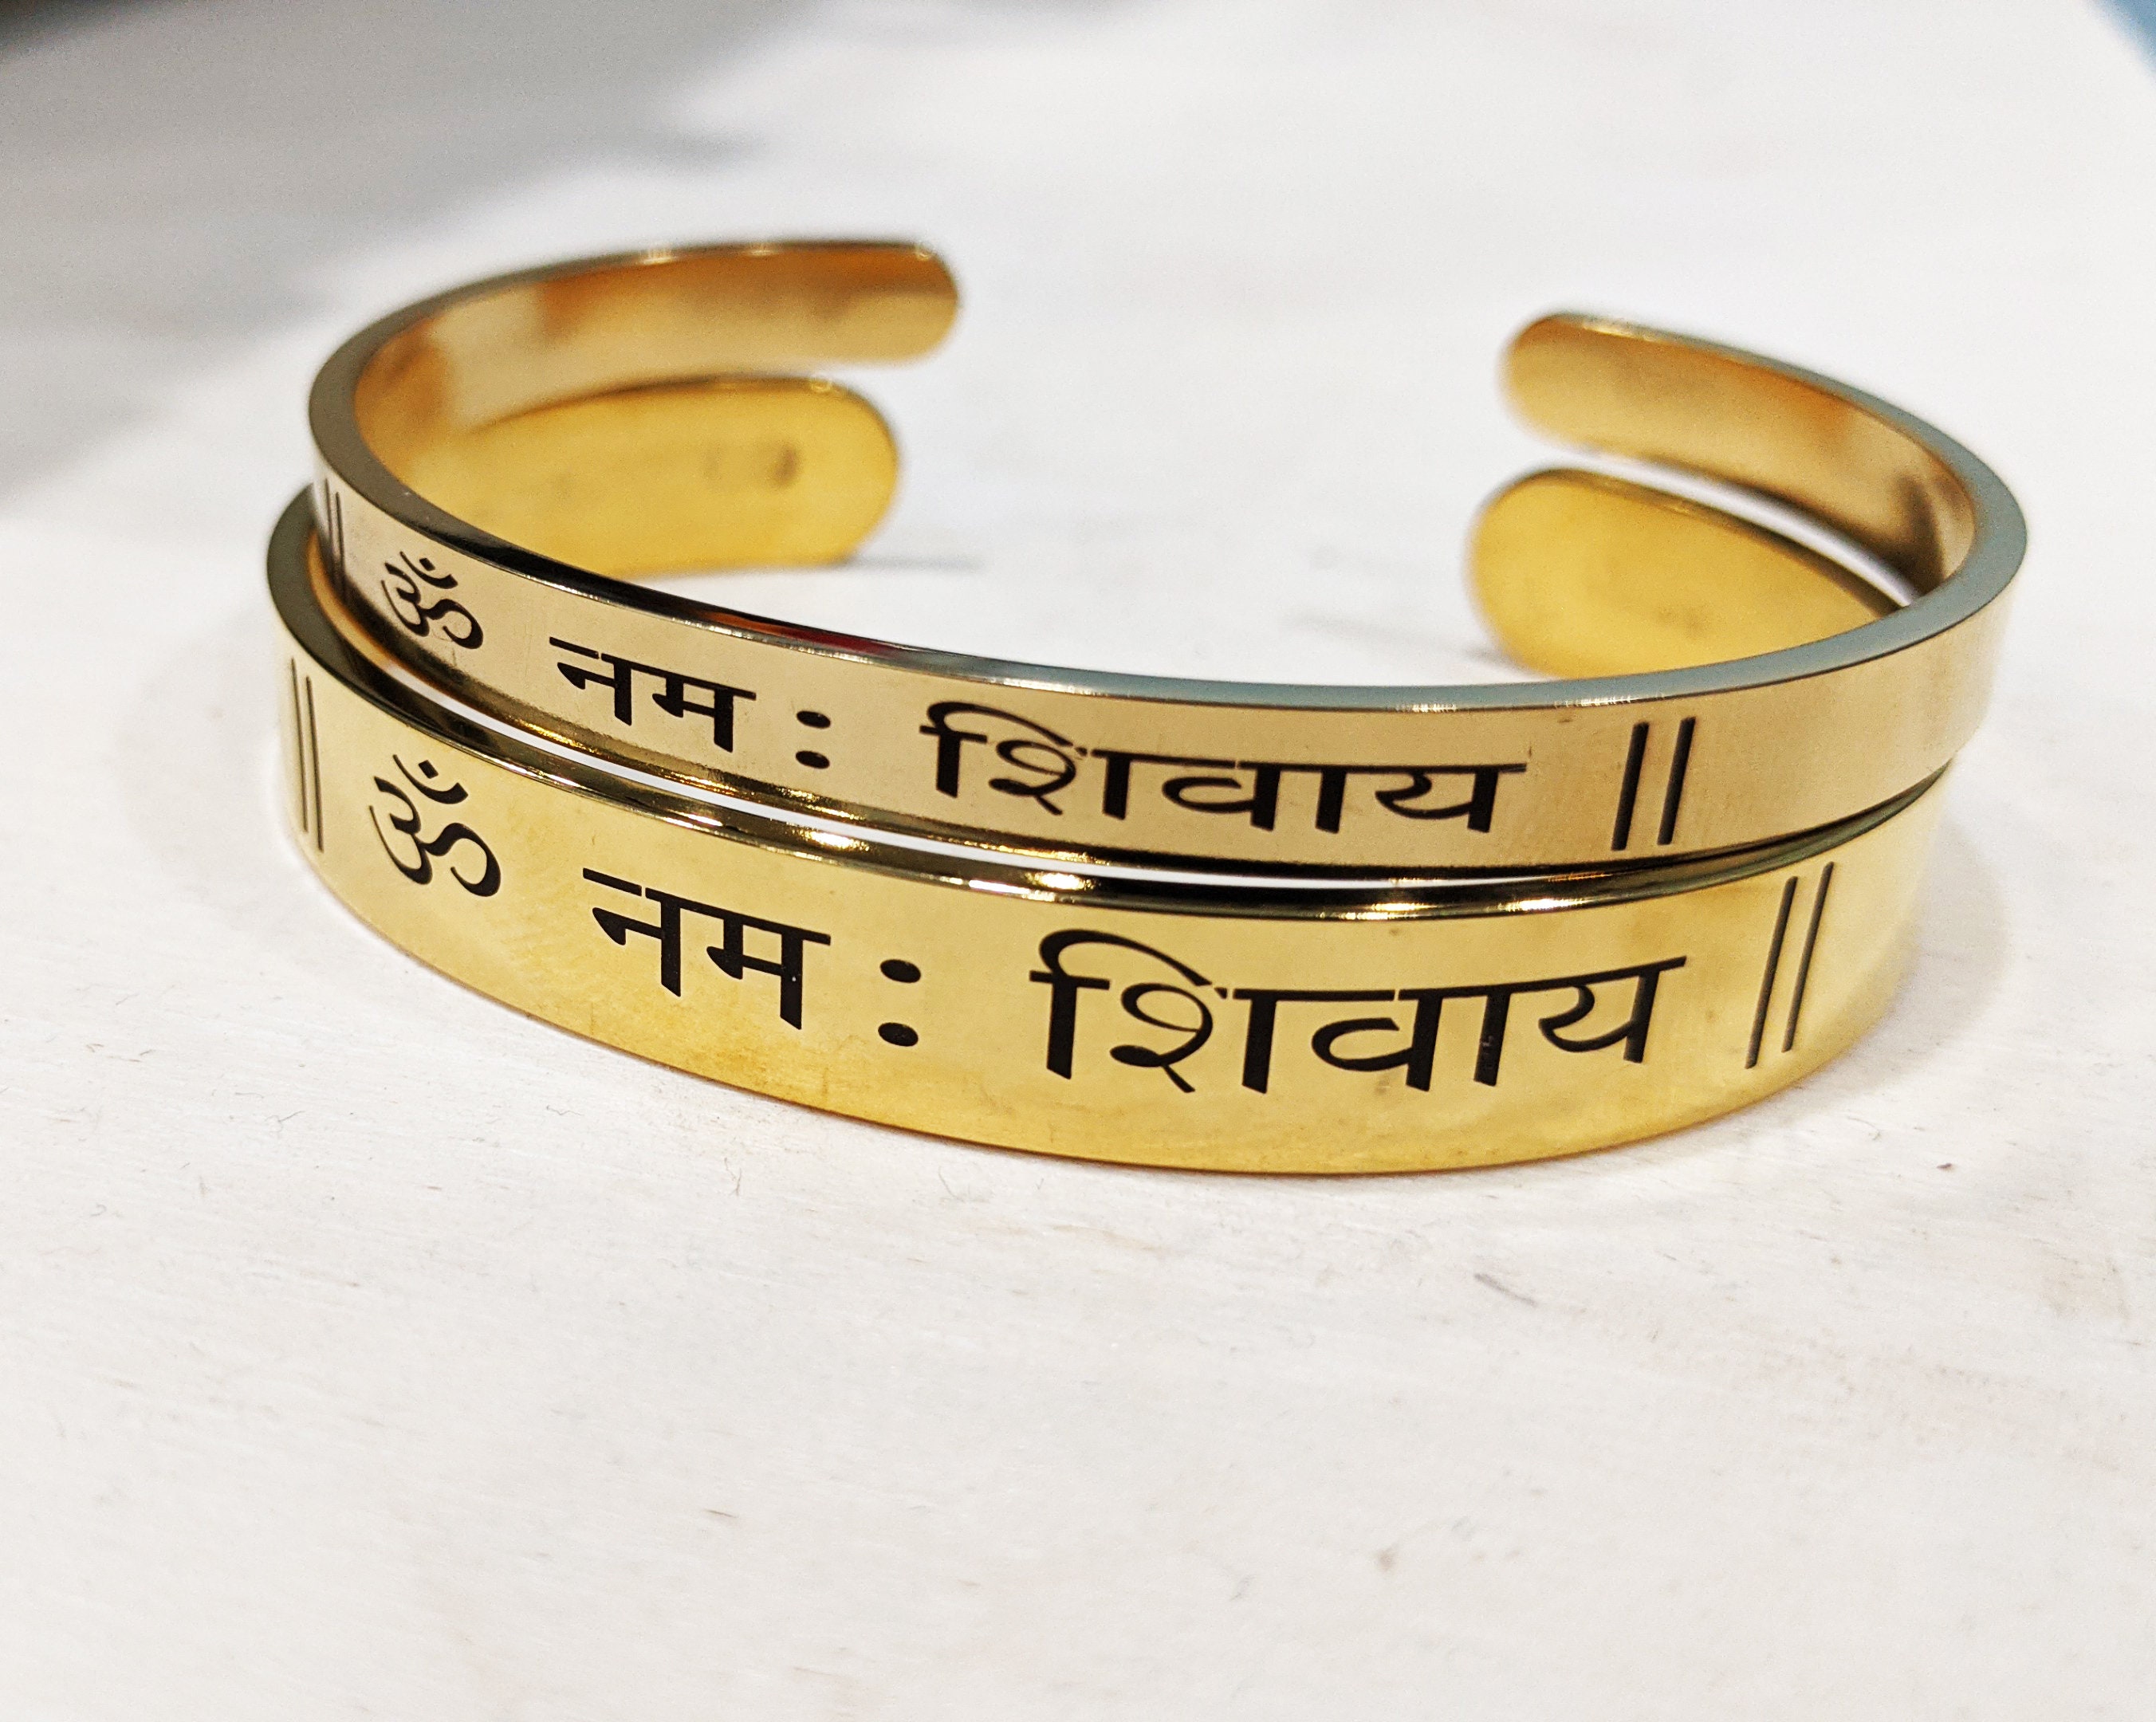 Buy Lakshmi Puja Stores Om Namah Shivaya Brass Adjustable Bangle Bracelet  For Men And Women at Amazon.in